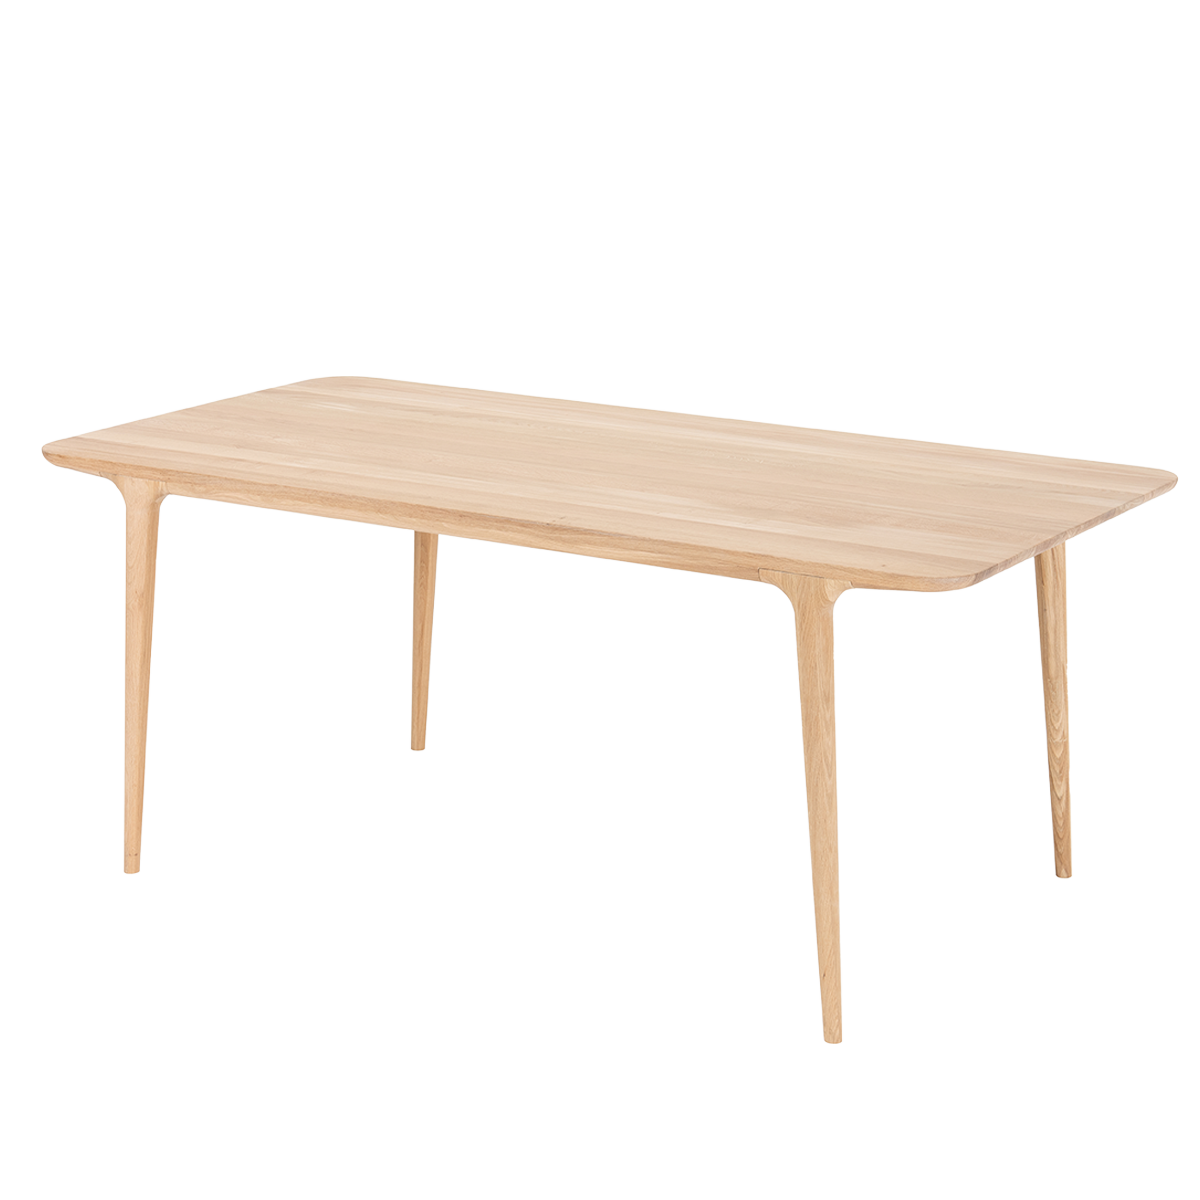 Fawn table houten eettafel whitewash - 180 x 90 cm